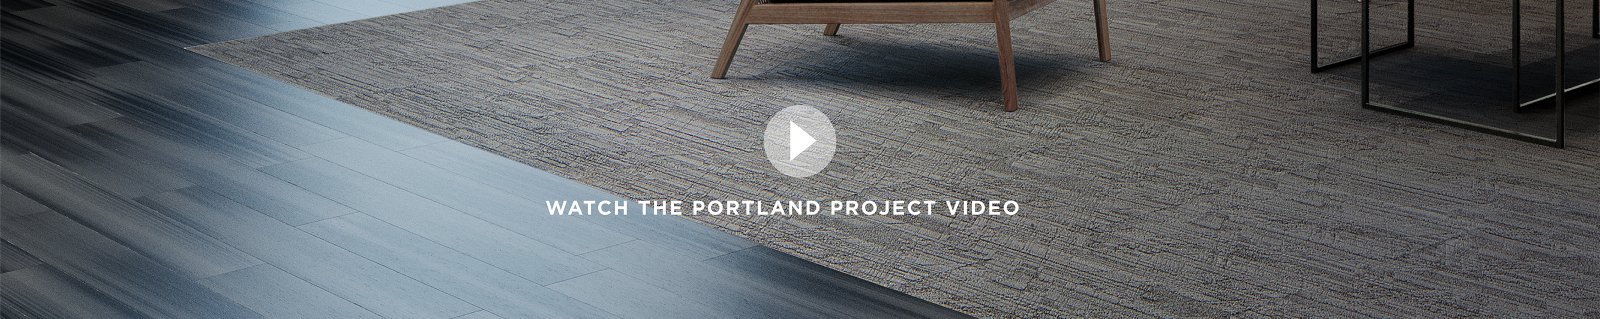 PortlandProjectcollectionsHeader 20180808185721 ?h=319&webp=True&fit=clip&w=1600